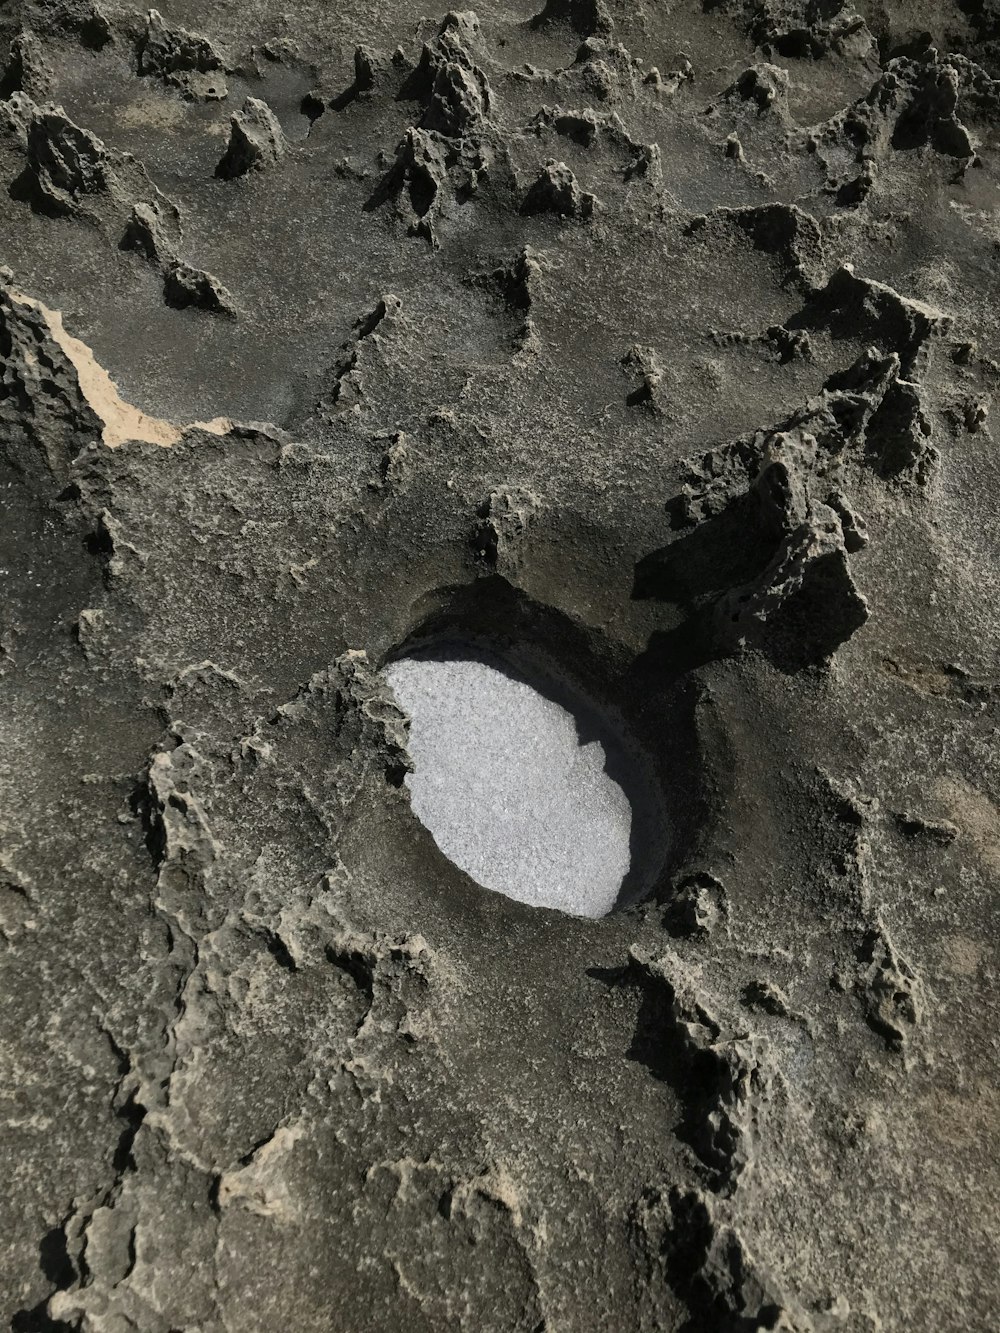 white round stone on brown sand